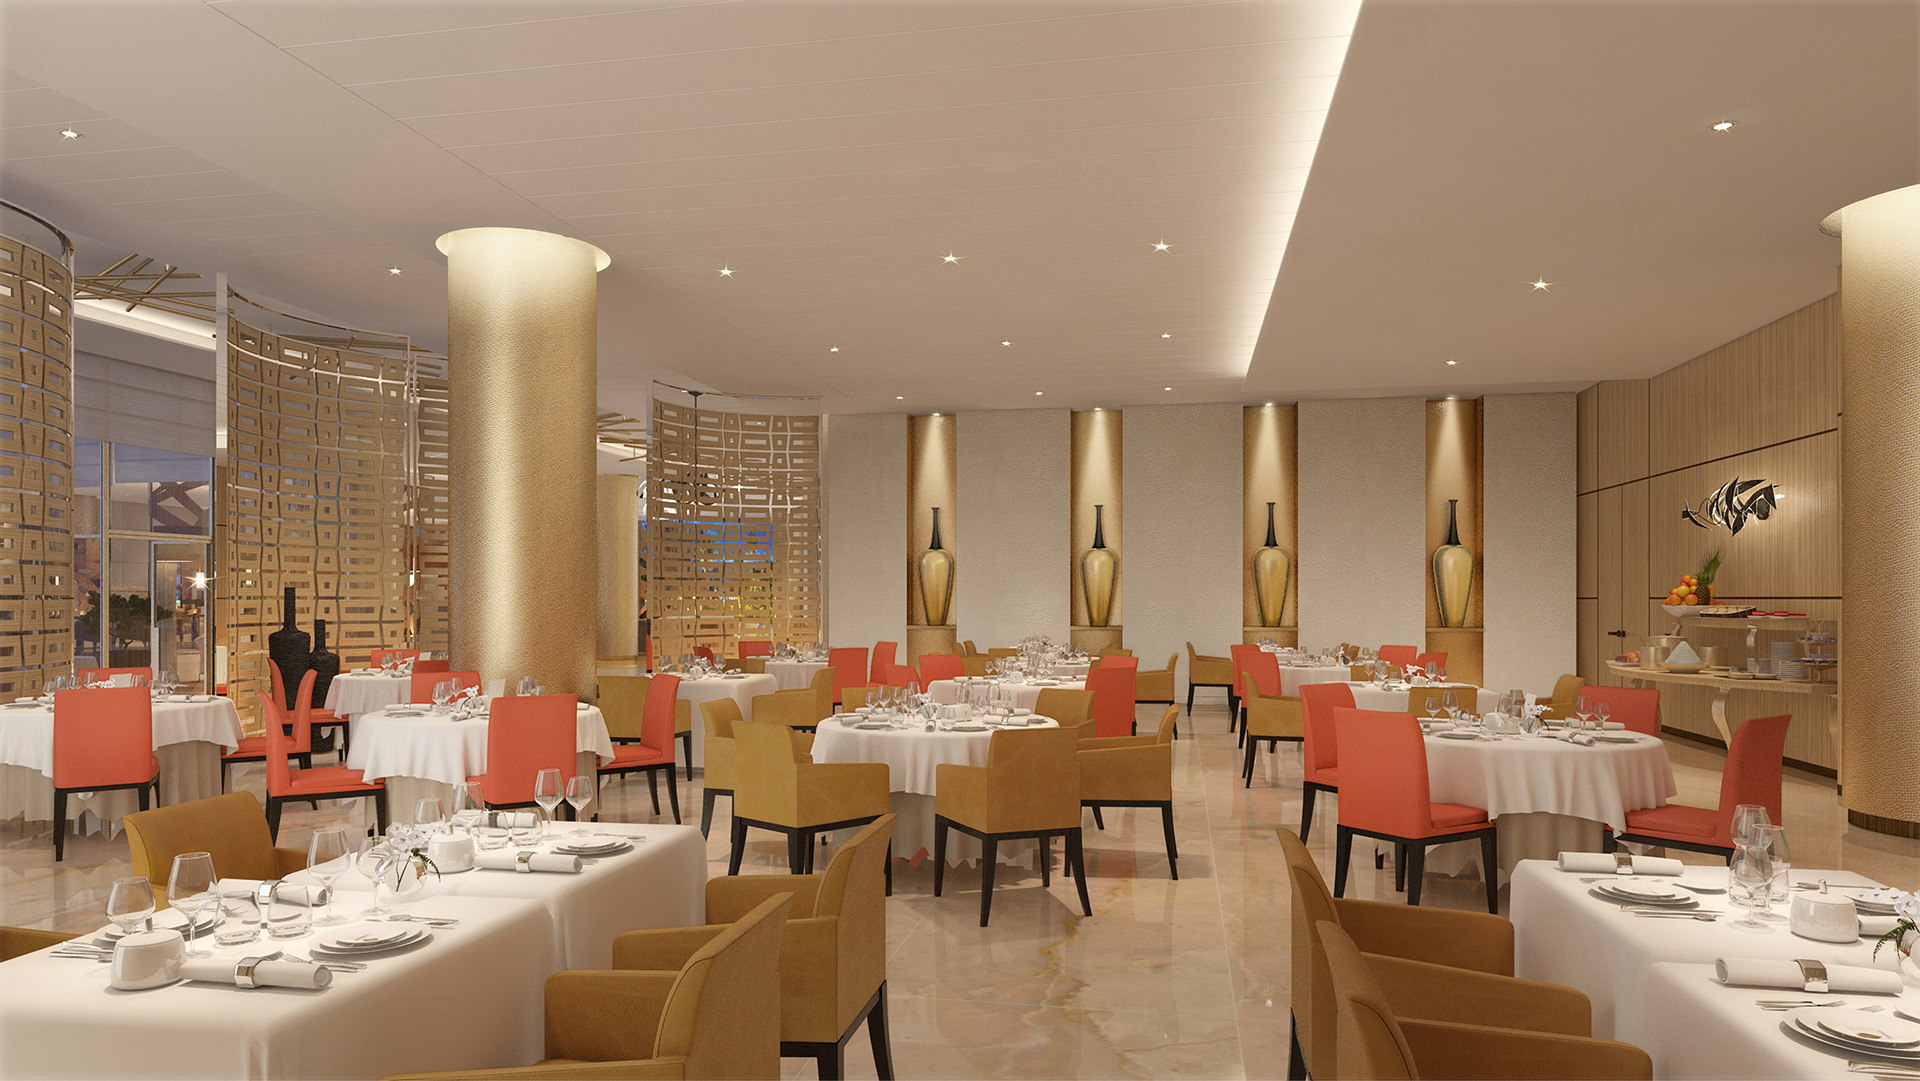 Restaurant, AZALAI Hôtel & Spa 4* by Borella Art Design